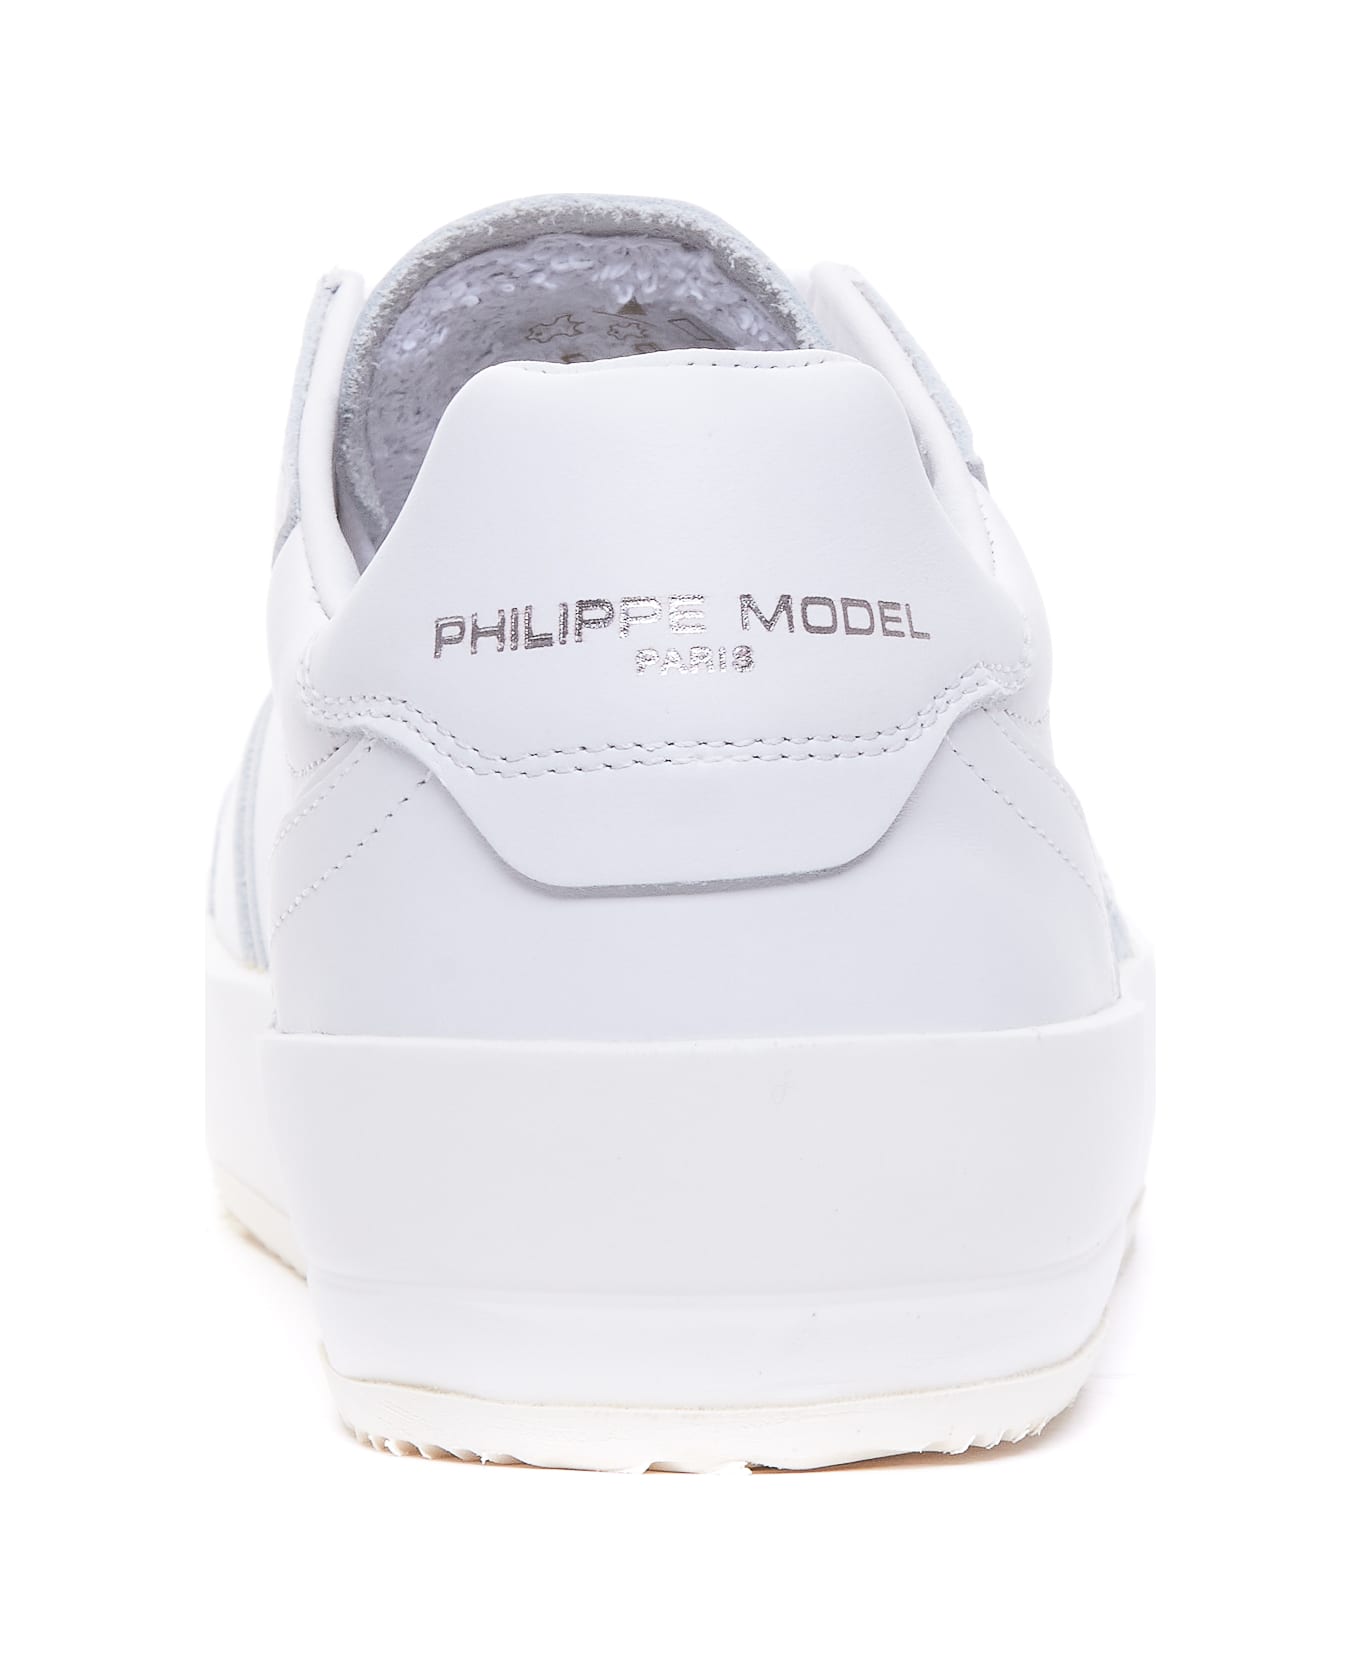 Philippe Model Nice Low Sneakers スニーカー